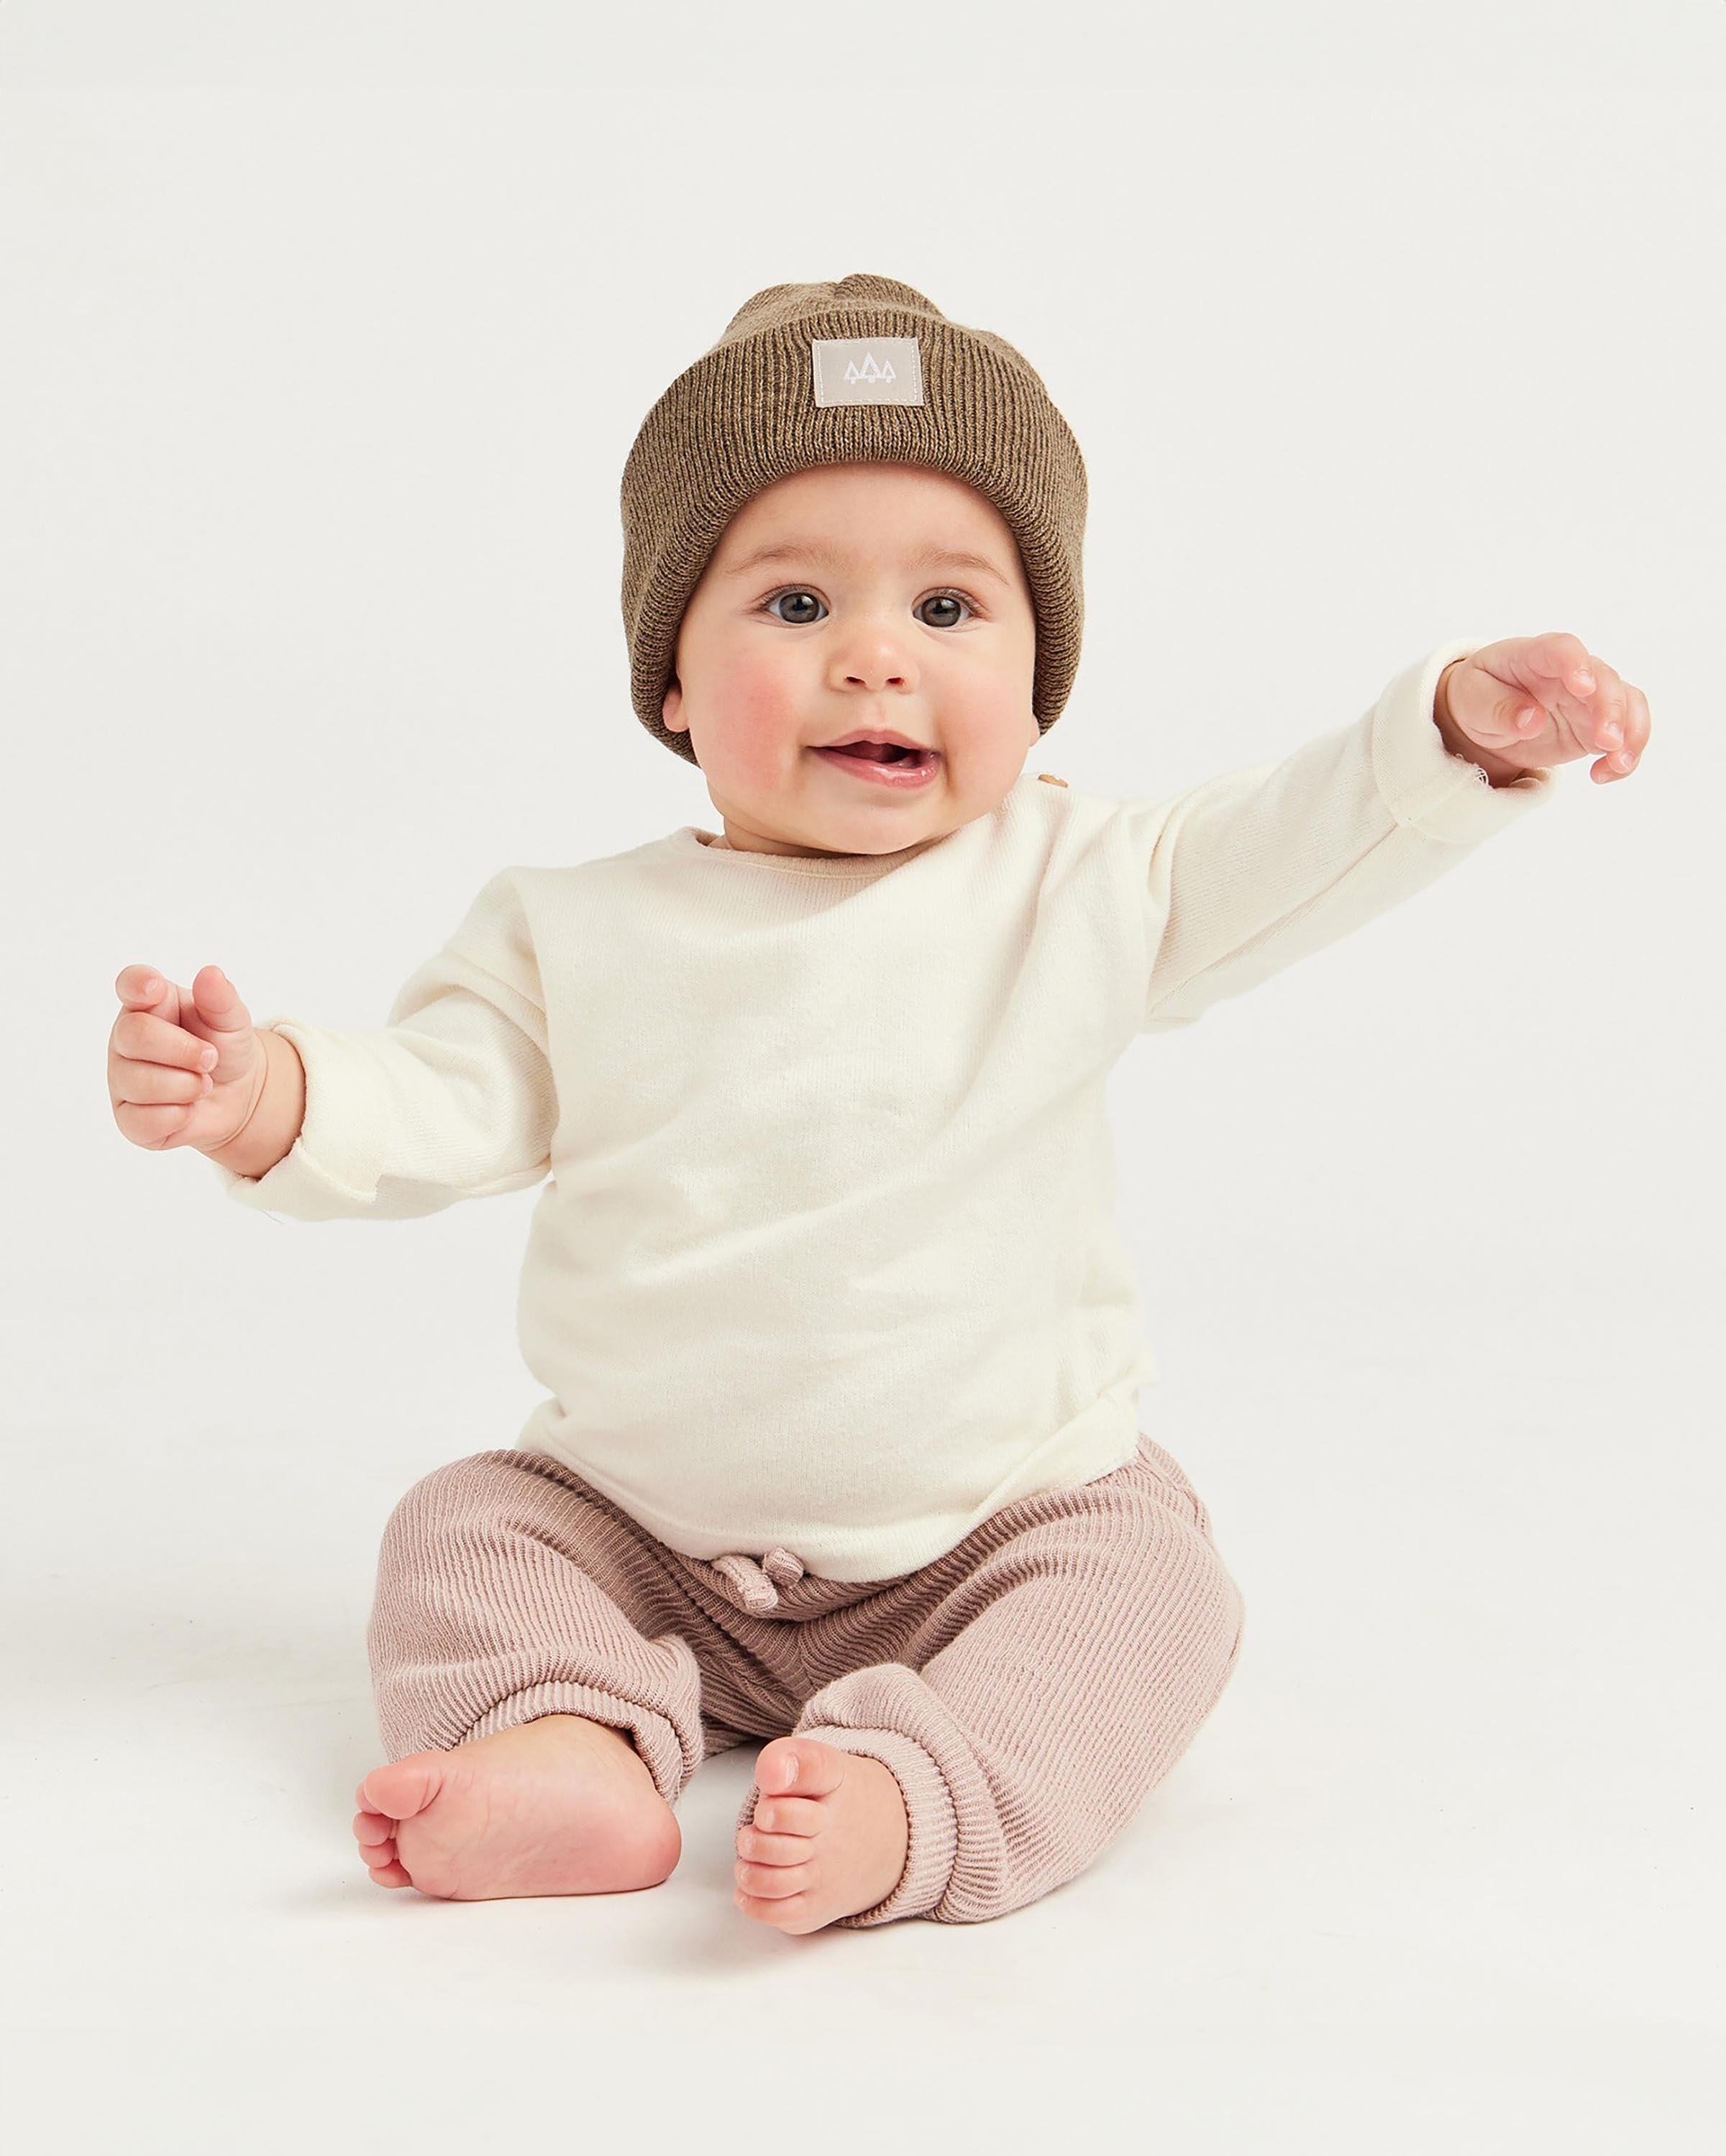 Baby Beacon Beanie in Brown Marled - undefined - Hemlock Hat Co. Beanies - Baby